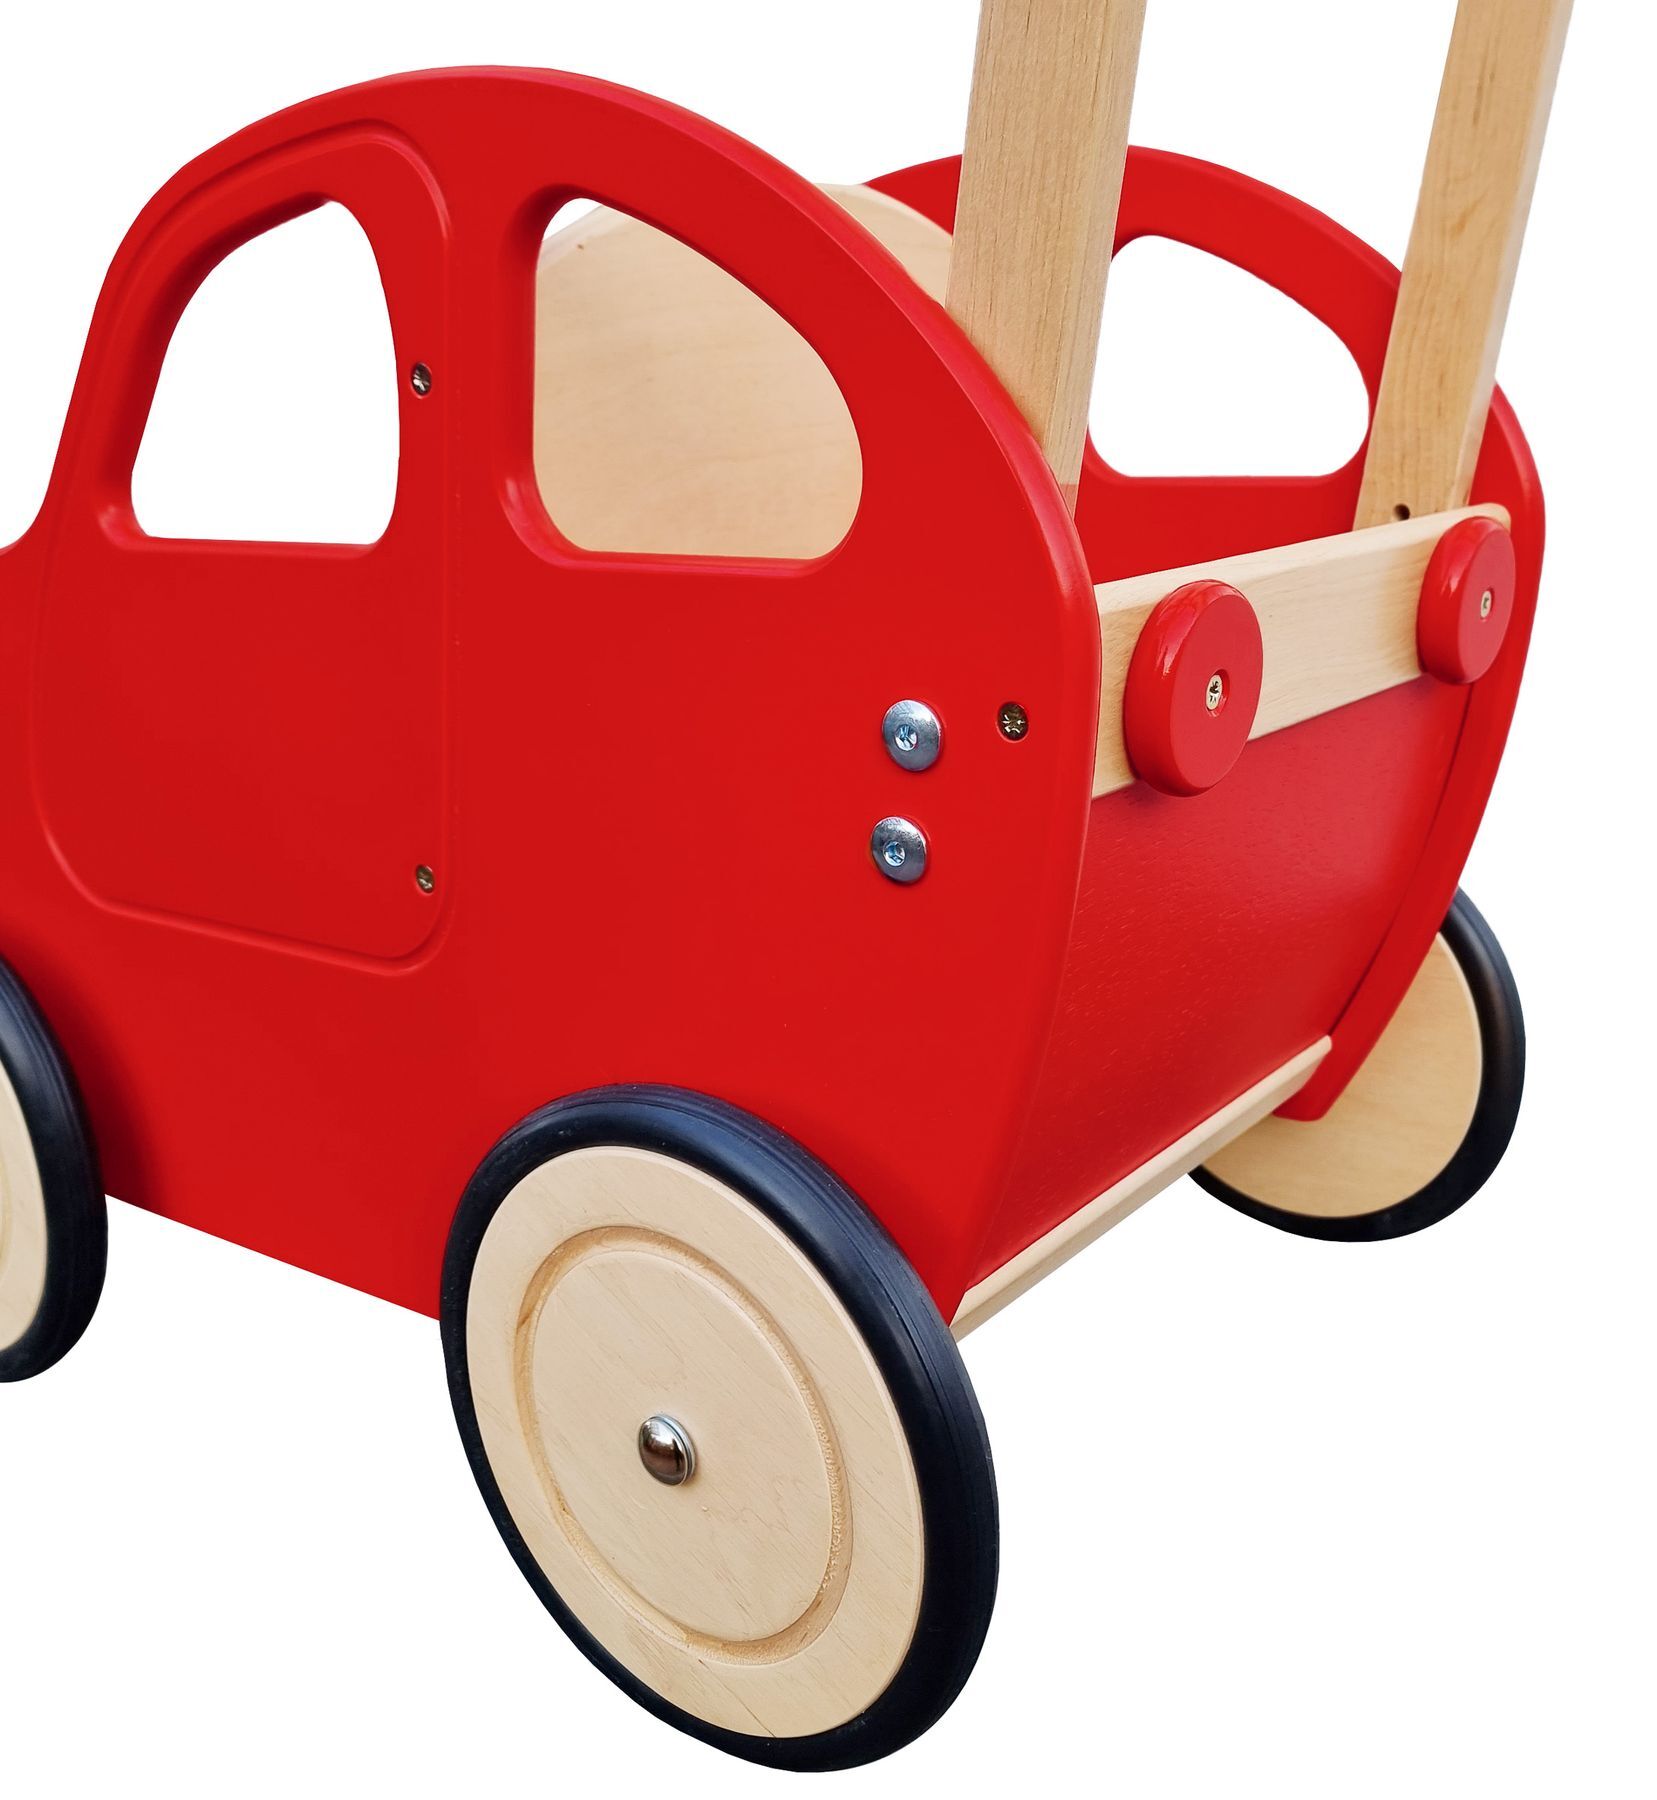 Lauflernwagen rotes Auto Teddytransporter Holzauto Puppenwagen 95-003